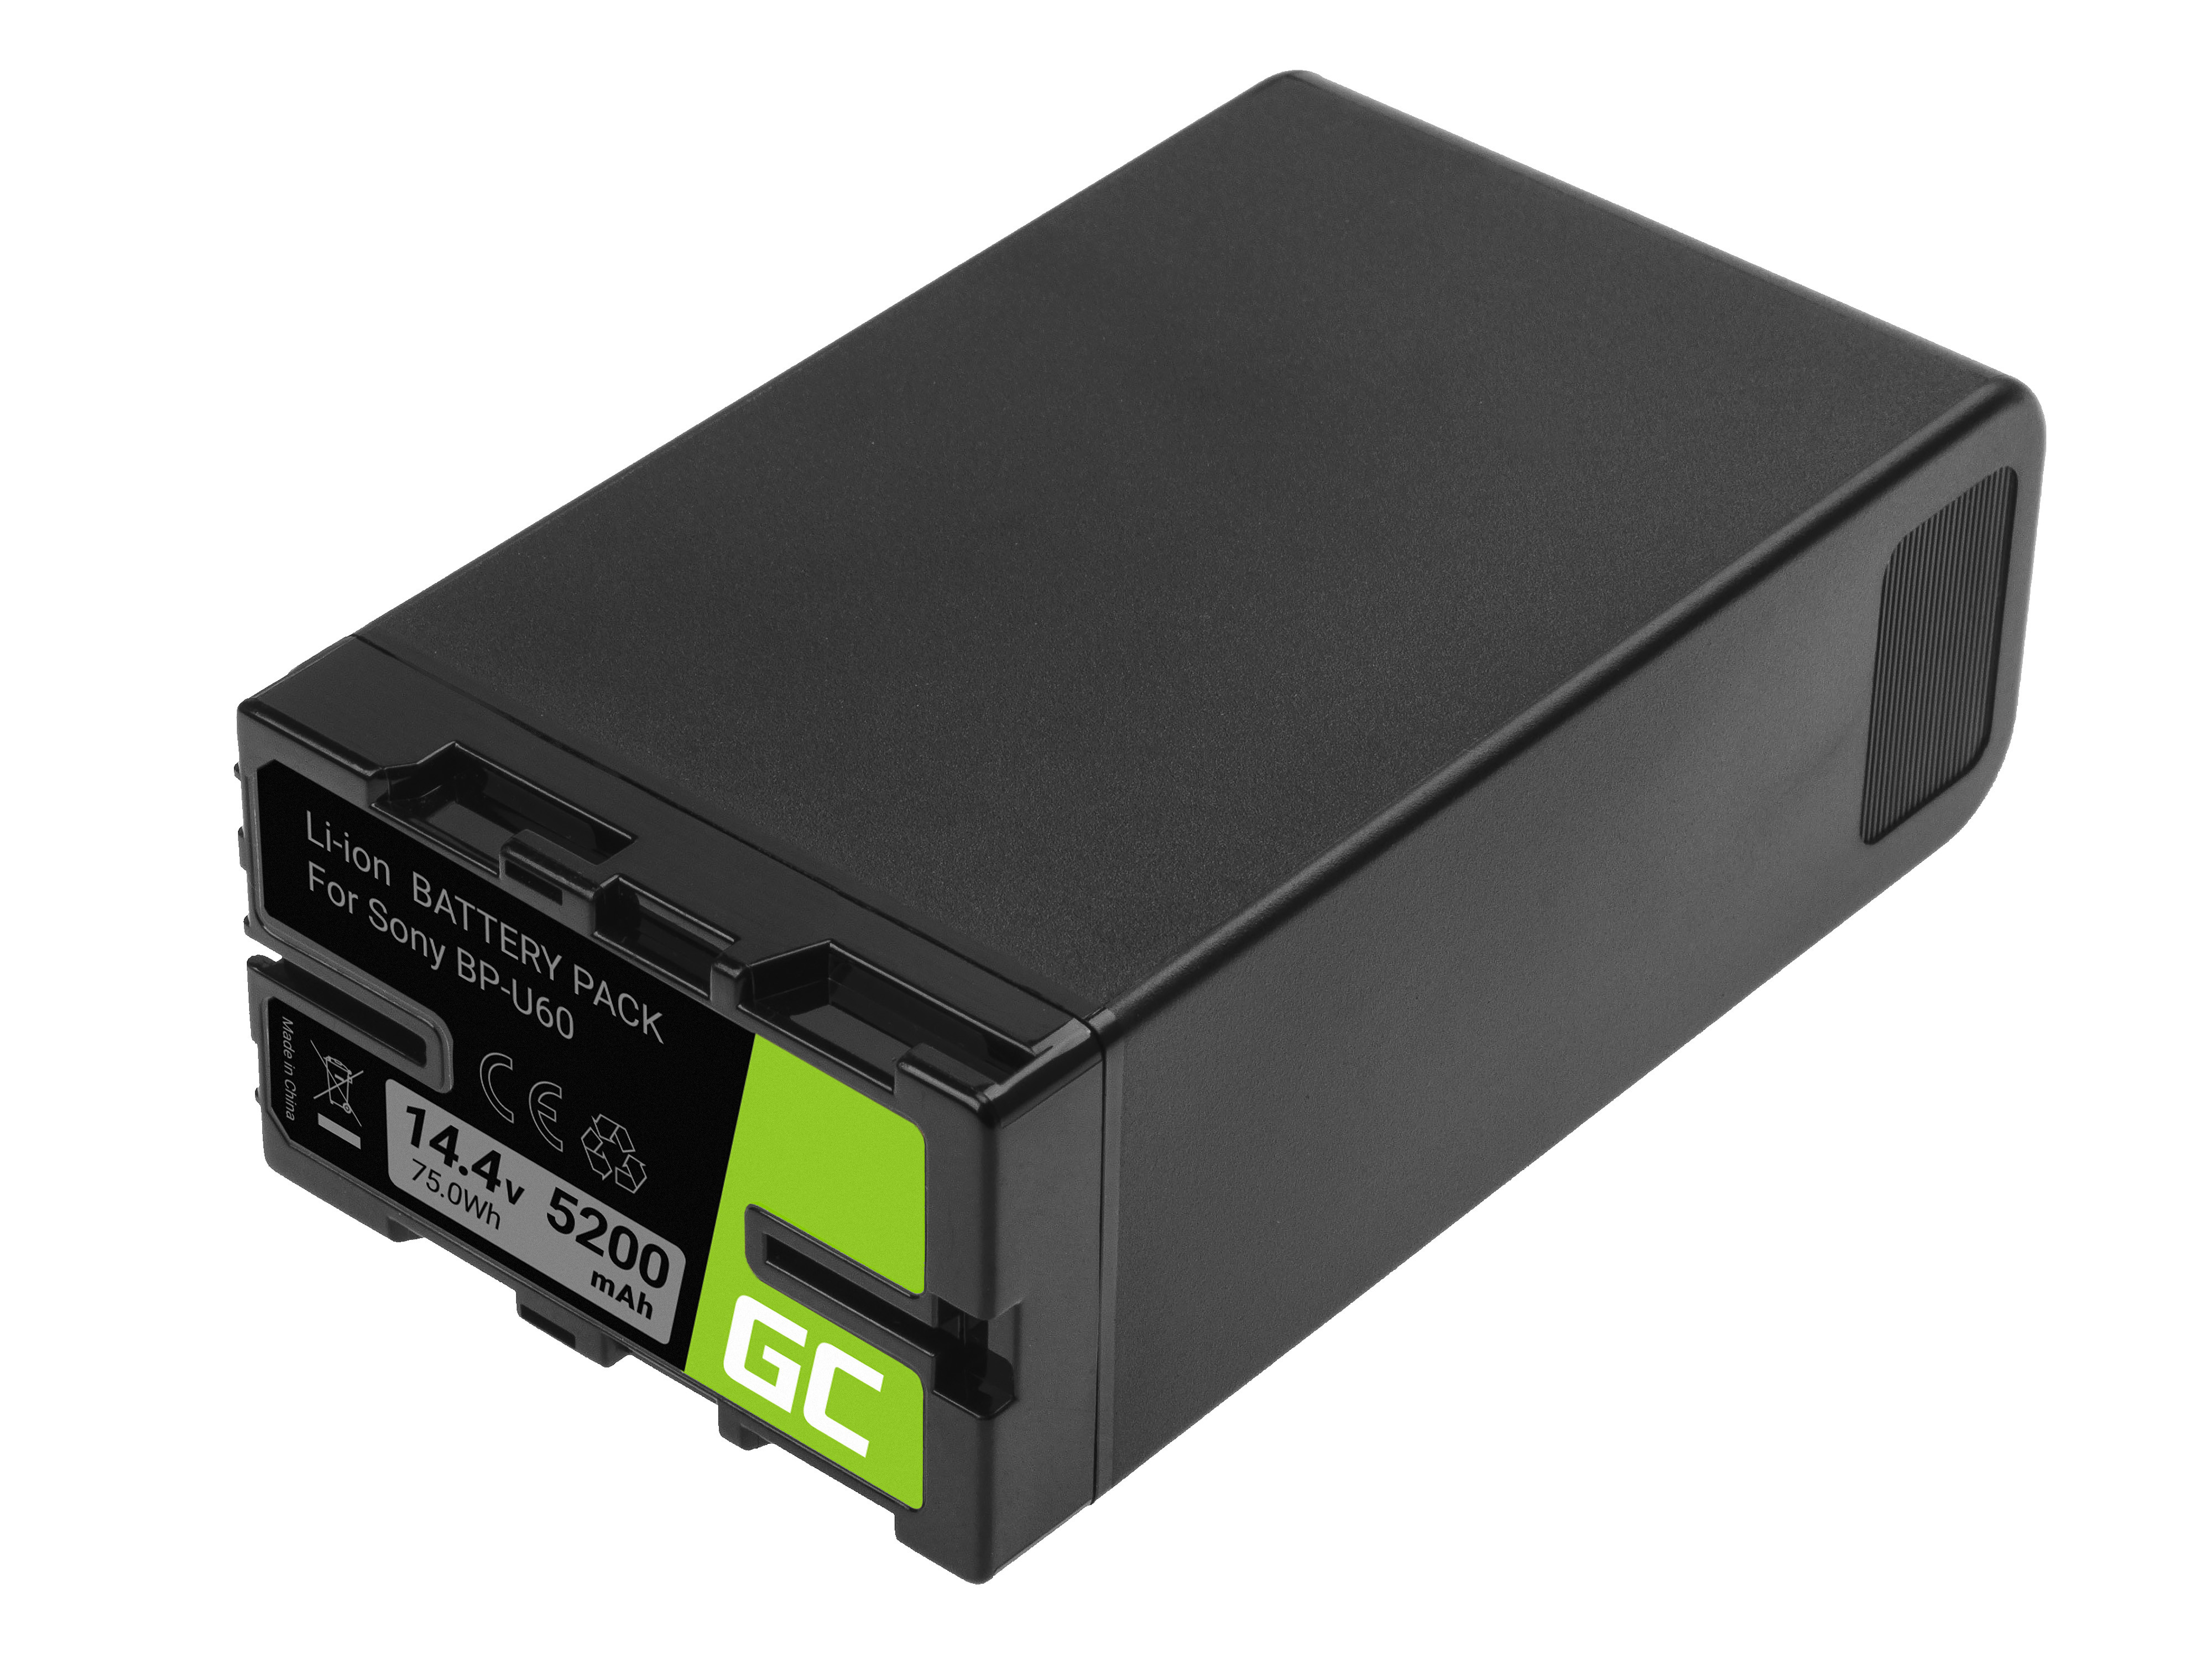 EOL--Green Cell Camera Battery BP-U90 BP-U60 BP-U30 for Sony 5200mAh 75Wh 14.4V